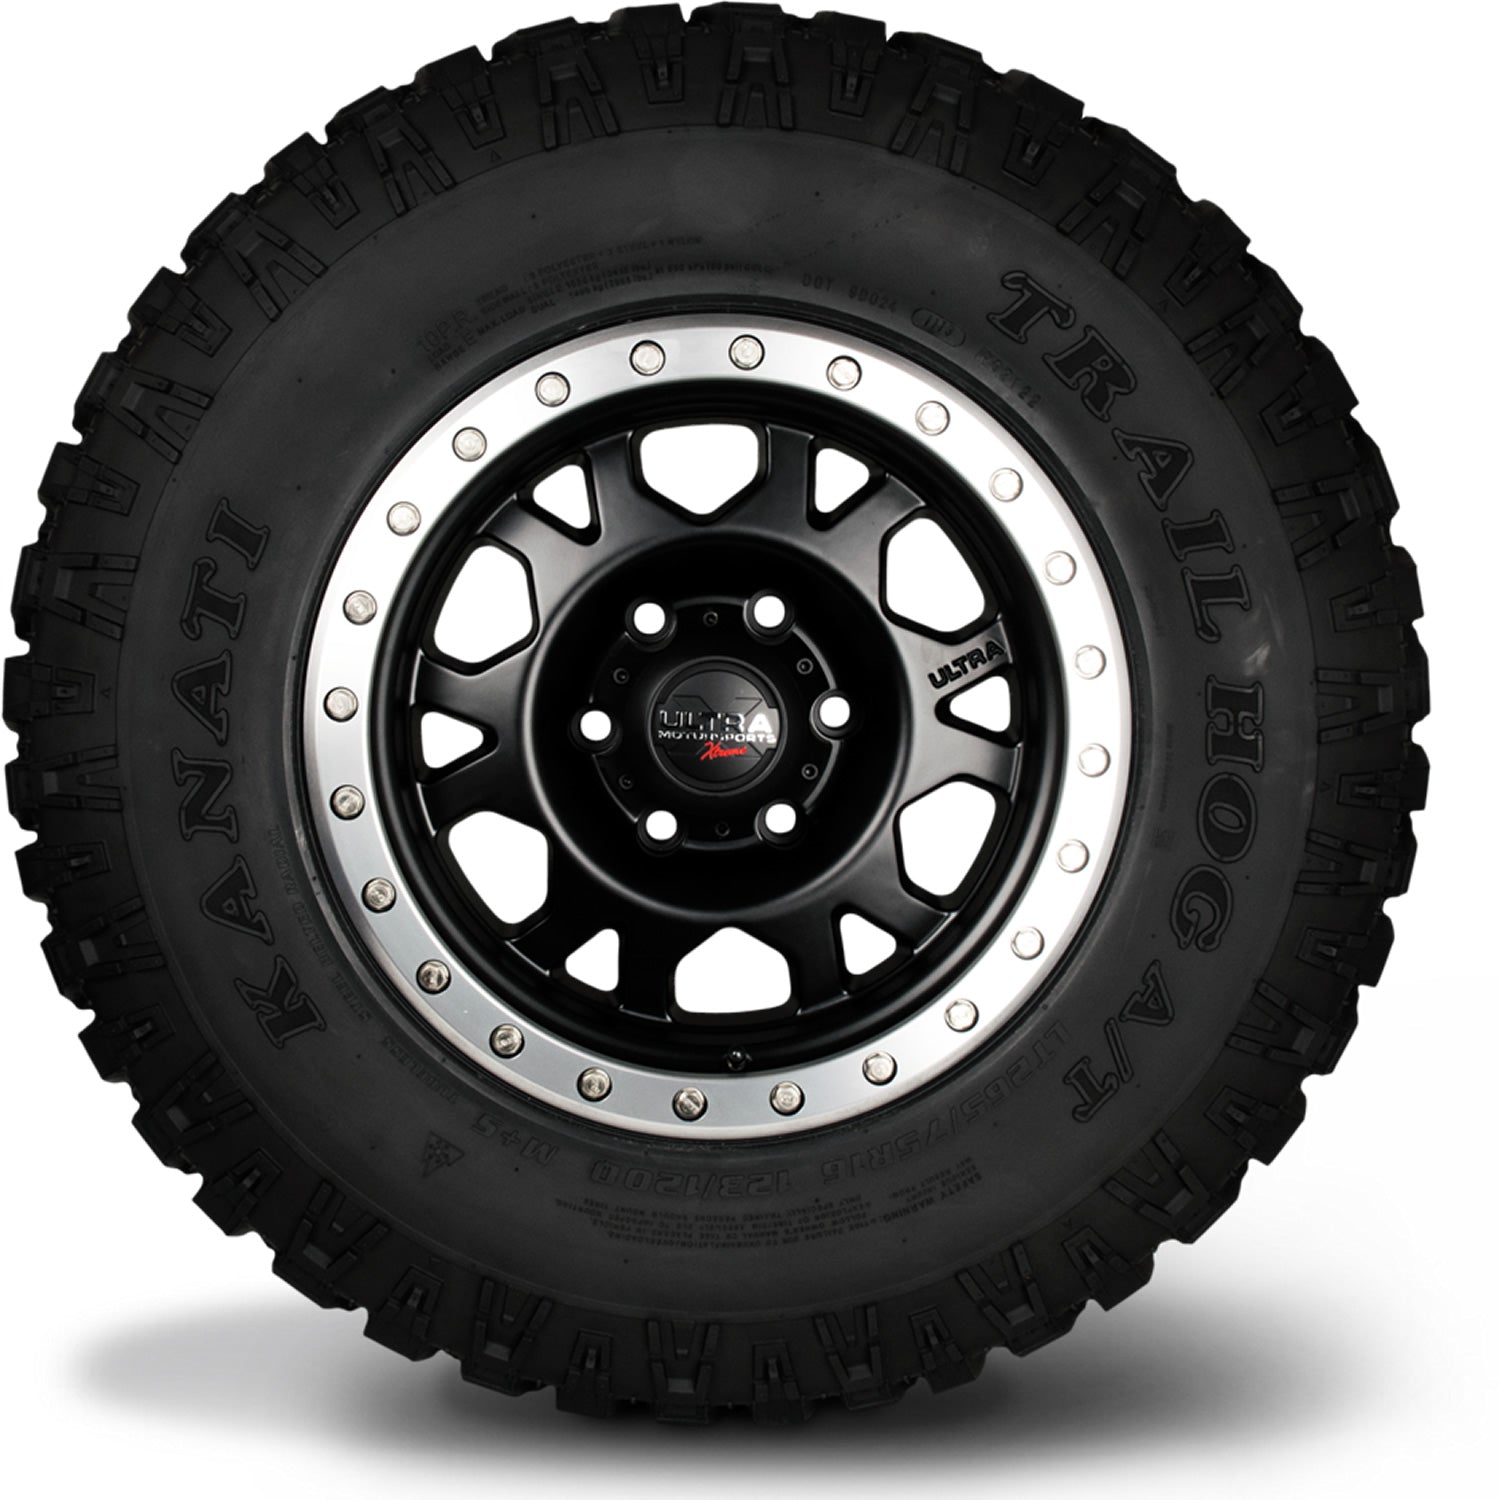 KANATI TRAIL HOG 37X12.50R18LT Tires